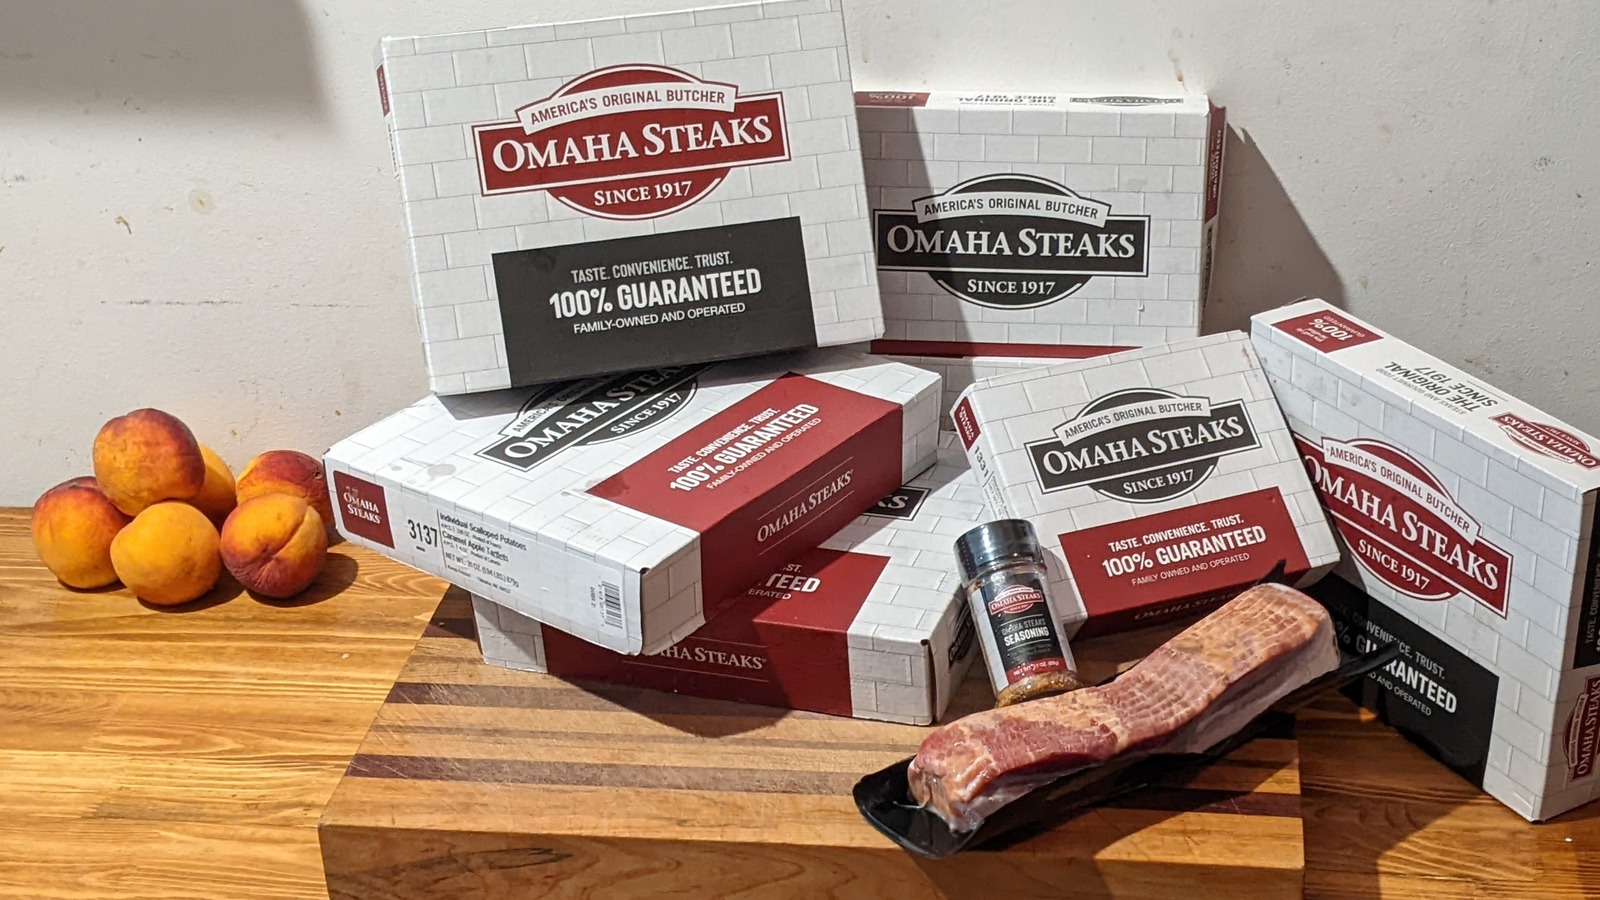 Omaha Steaks Gift Card